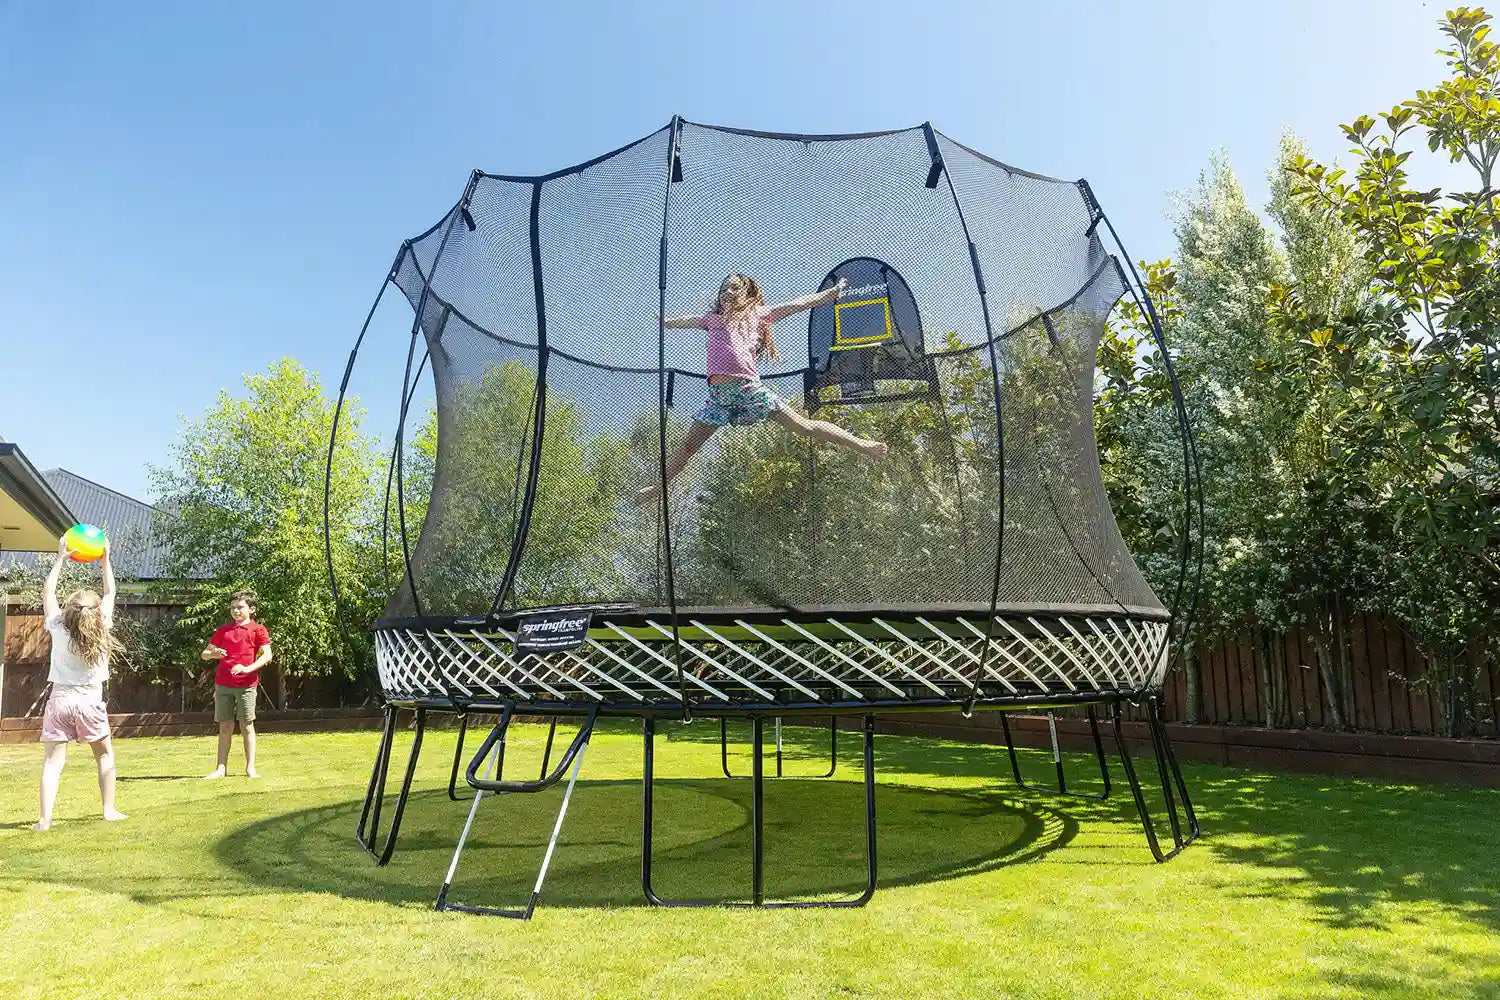 a girl jumping high on an outdoor trampoline